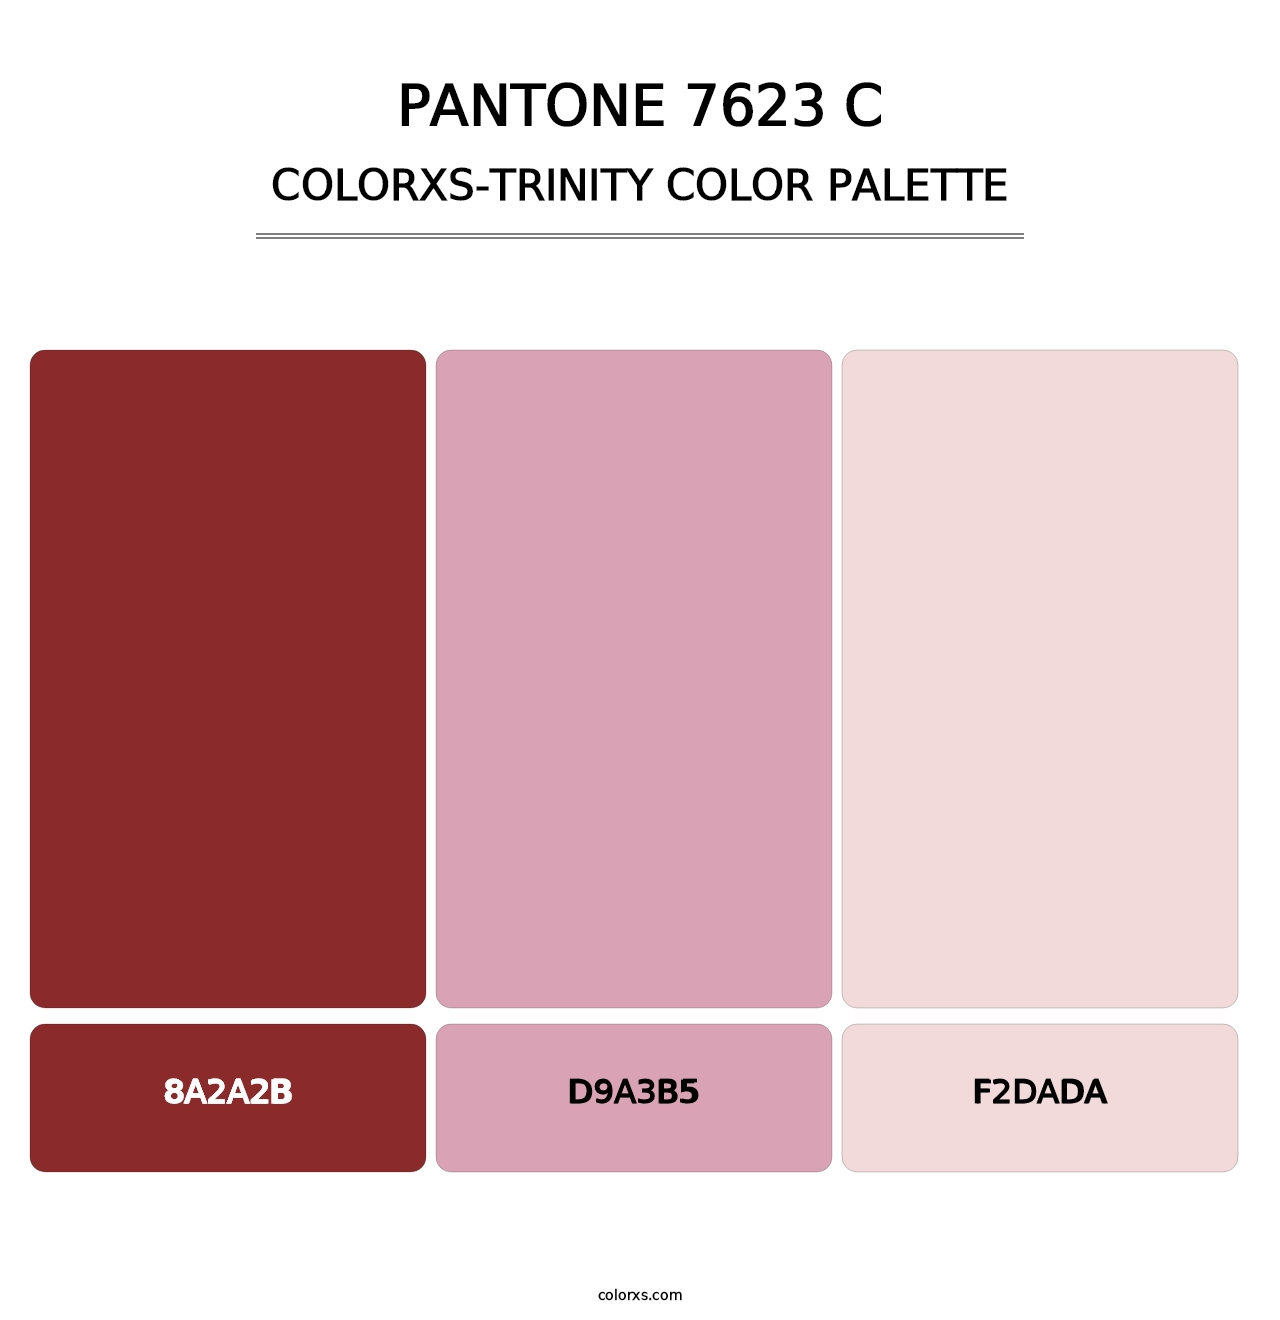 PANTONE 7623 C - Colorxs Trinity Palette